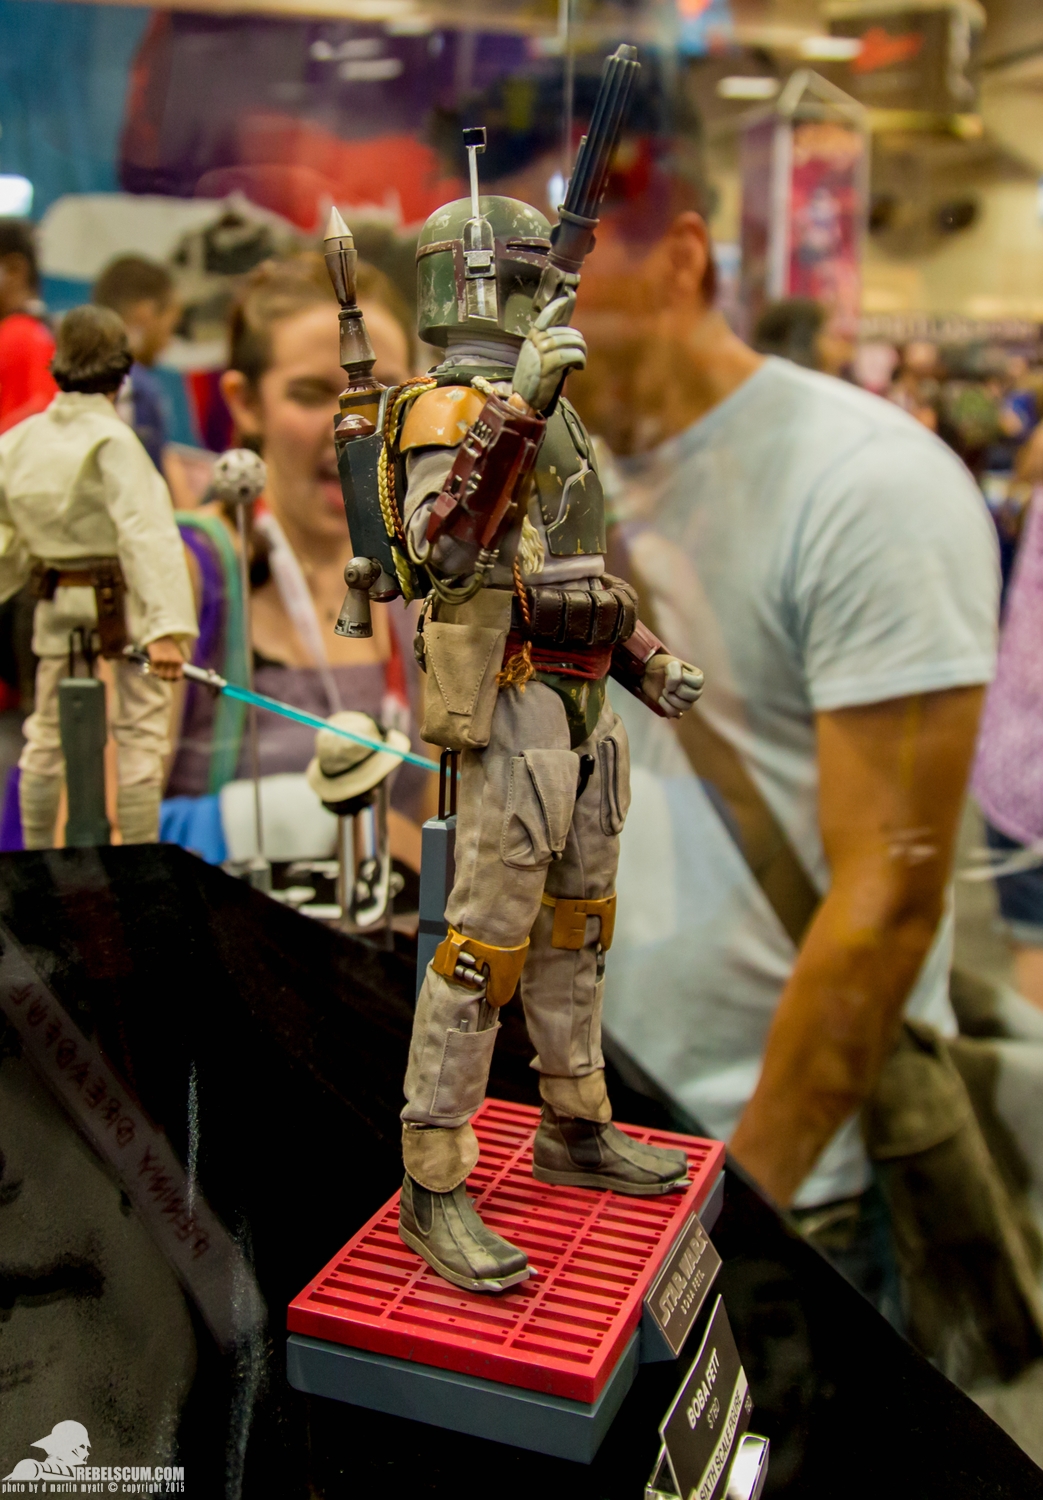 Hot-Toys-Display-2015-San-Diego-Comic-Con-SDCC-005.jpg